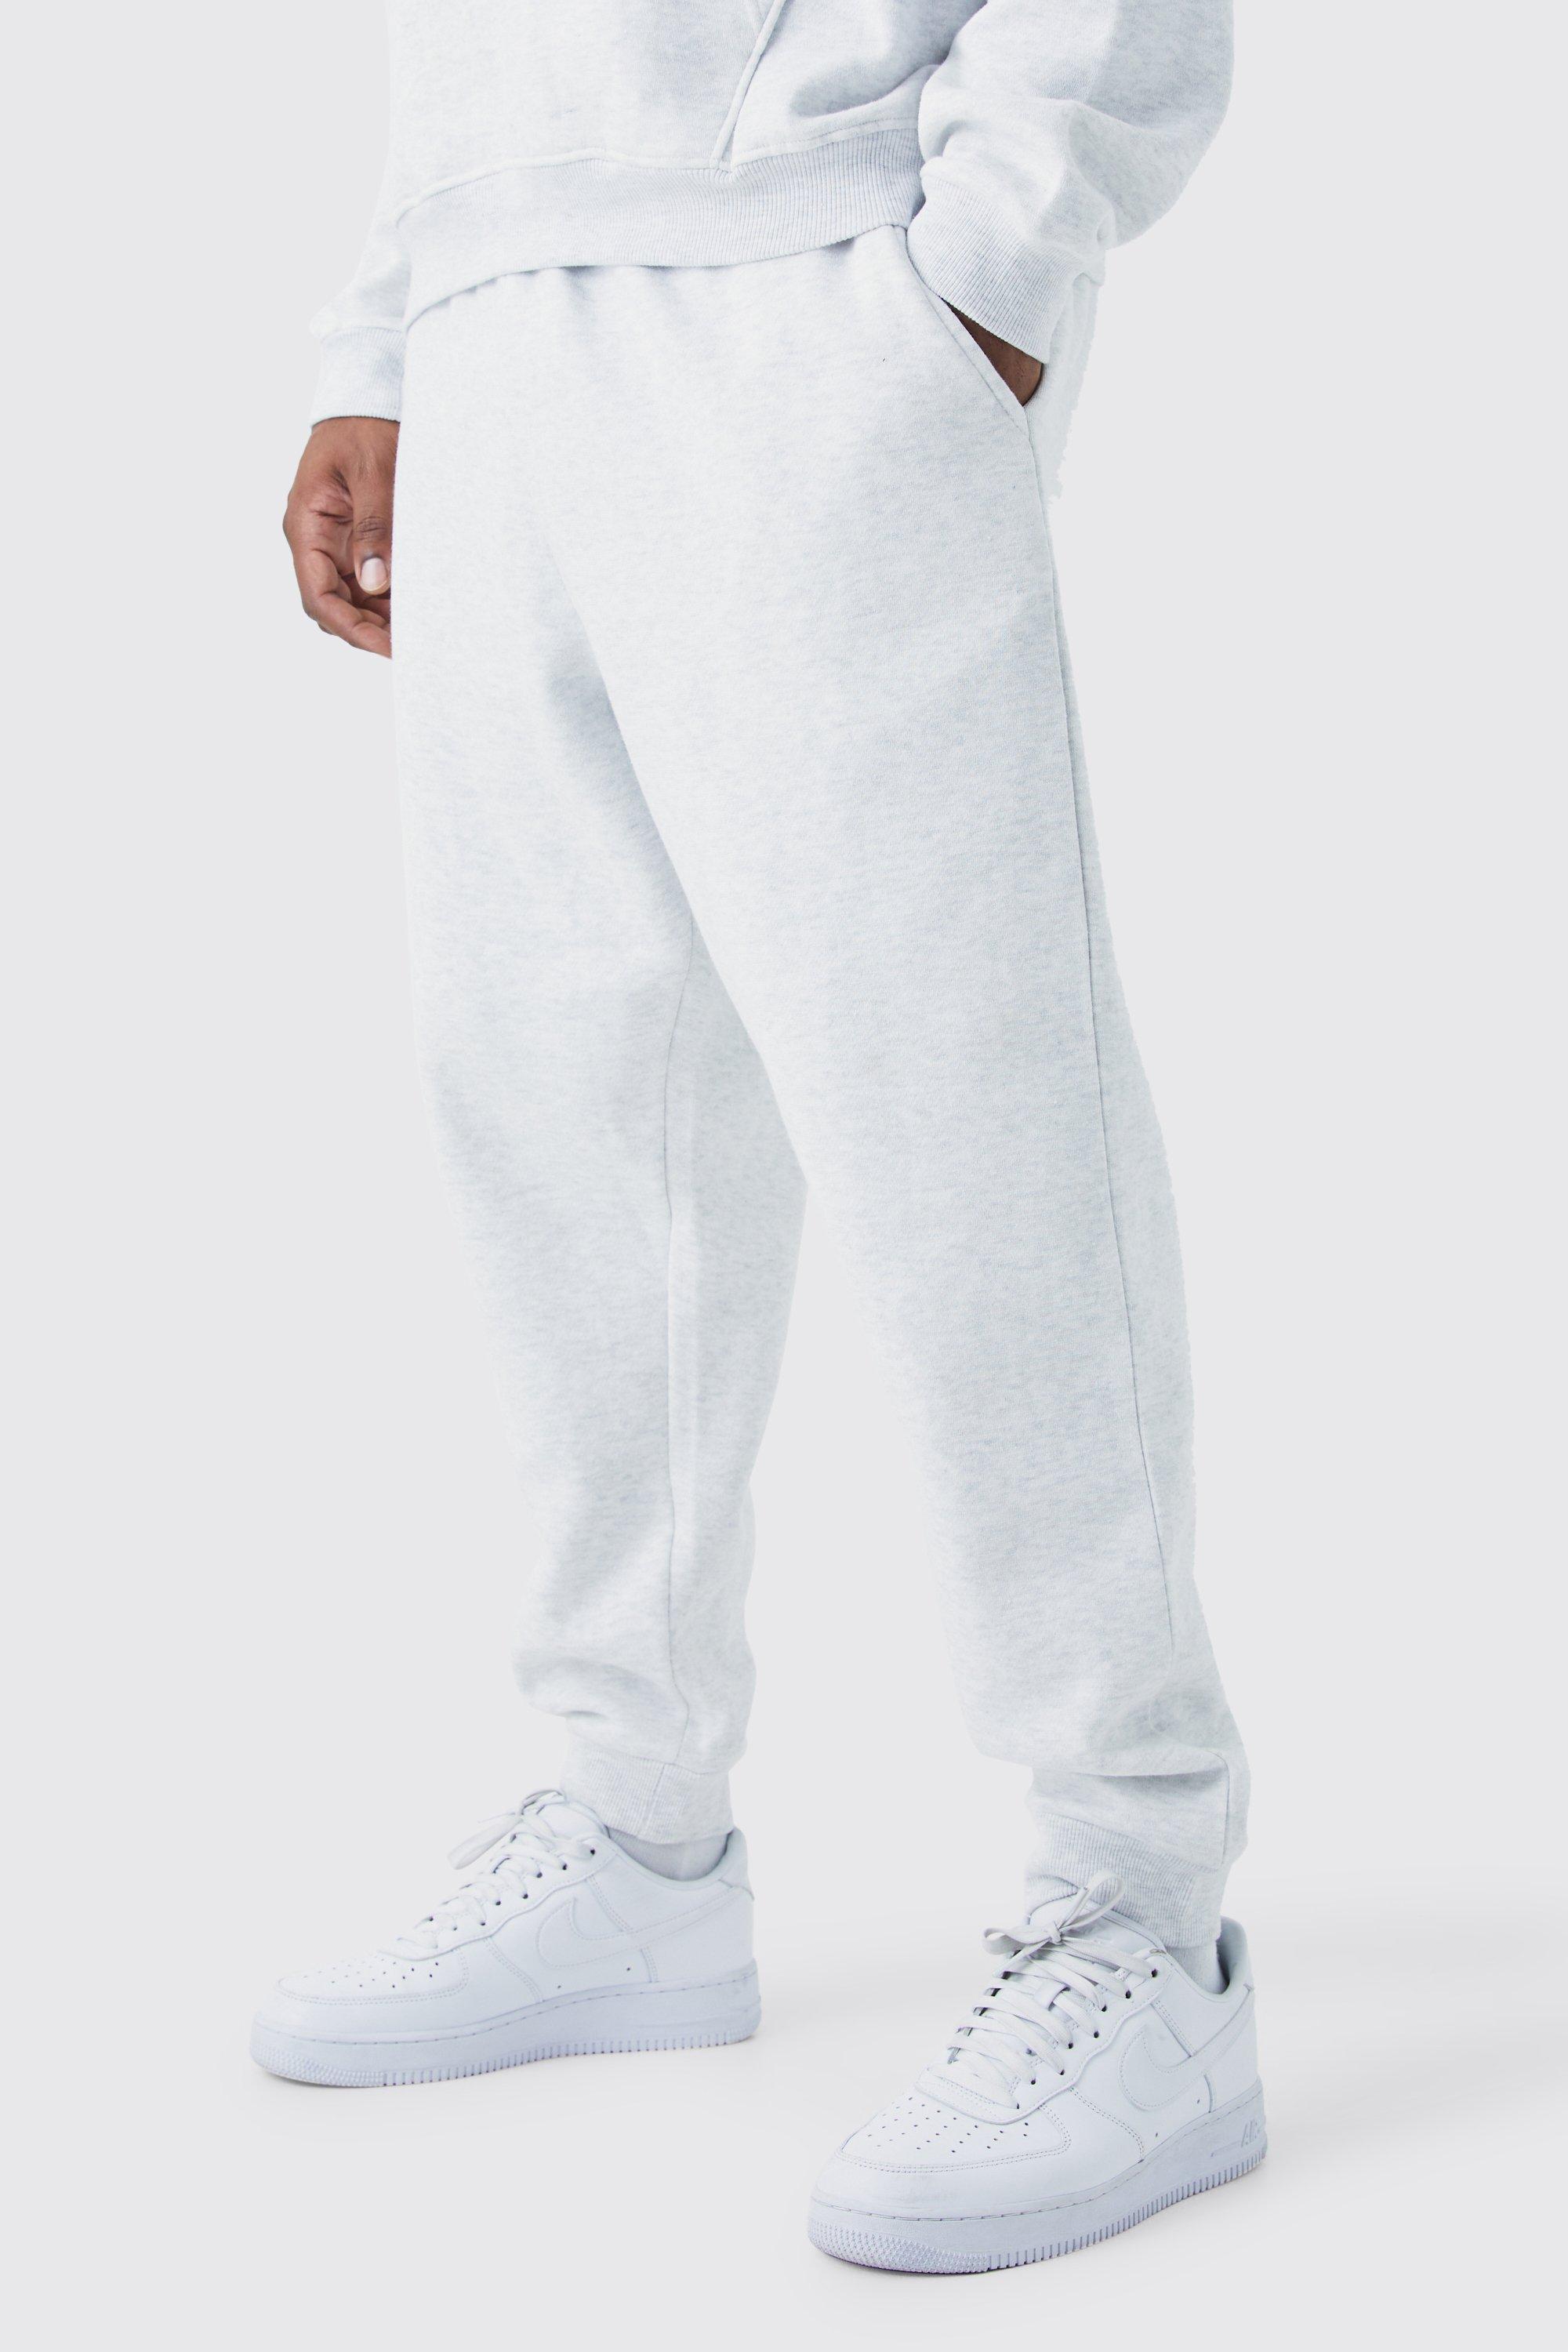 Image of Pantaloni tuta Plus Size Basic Slim Fit, Grigio